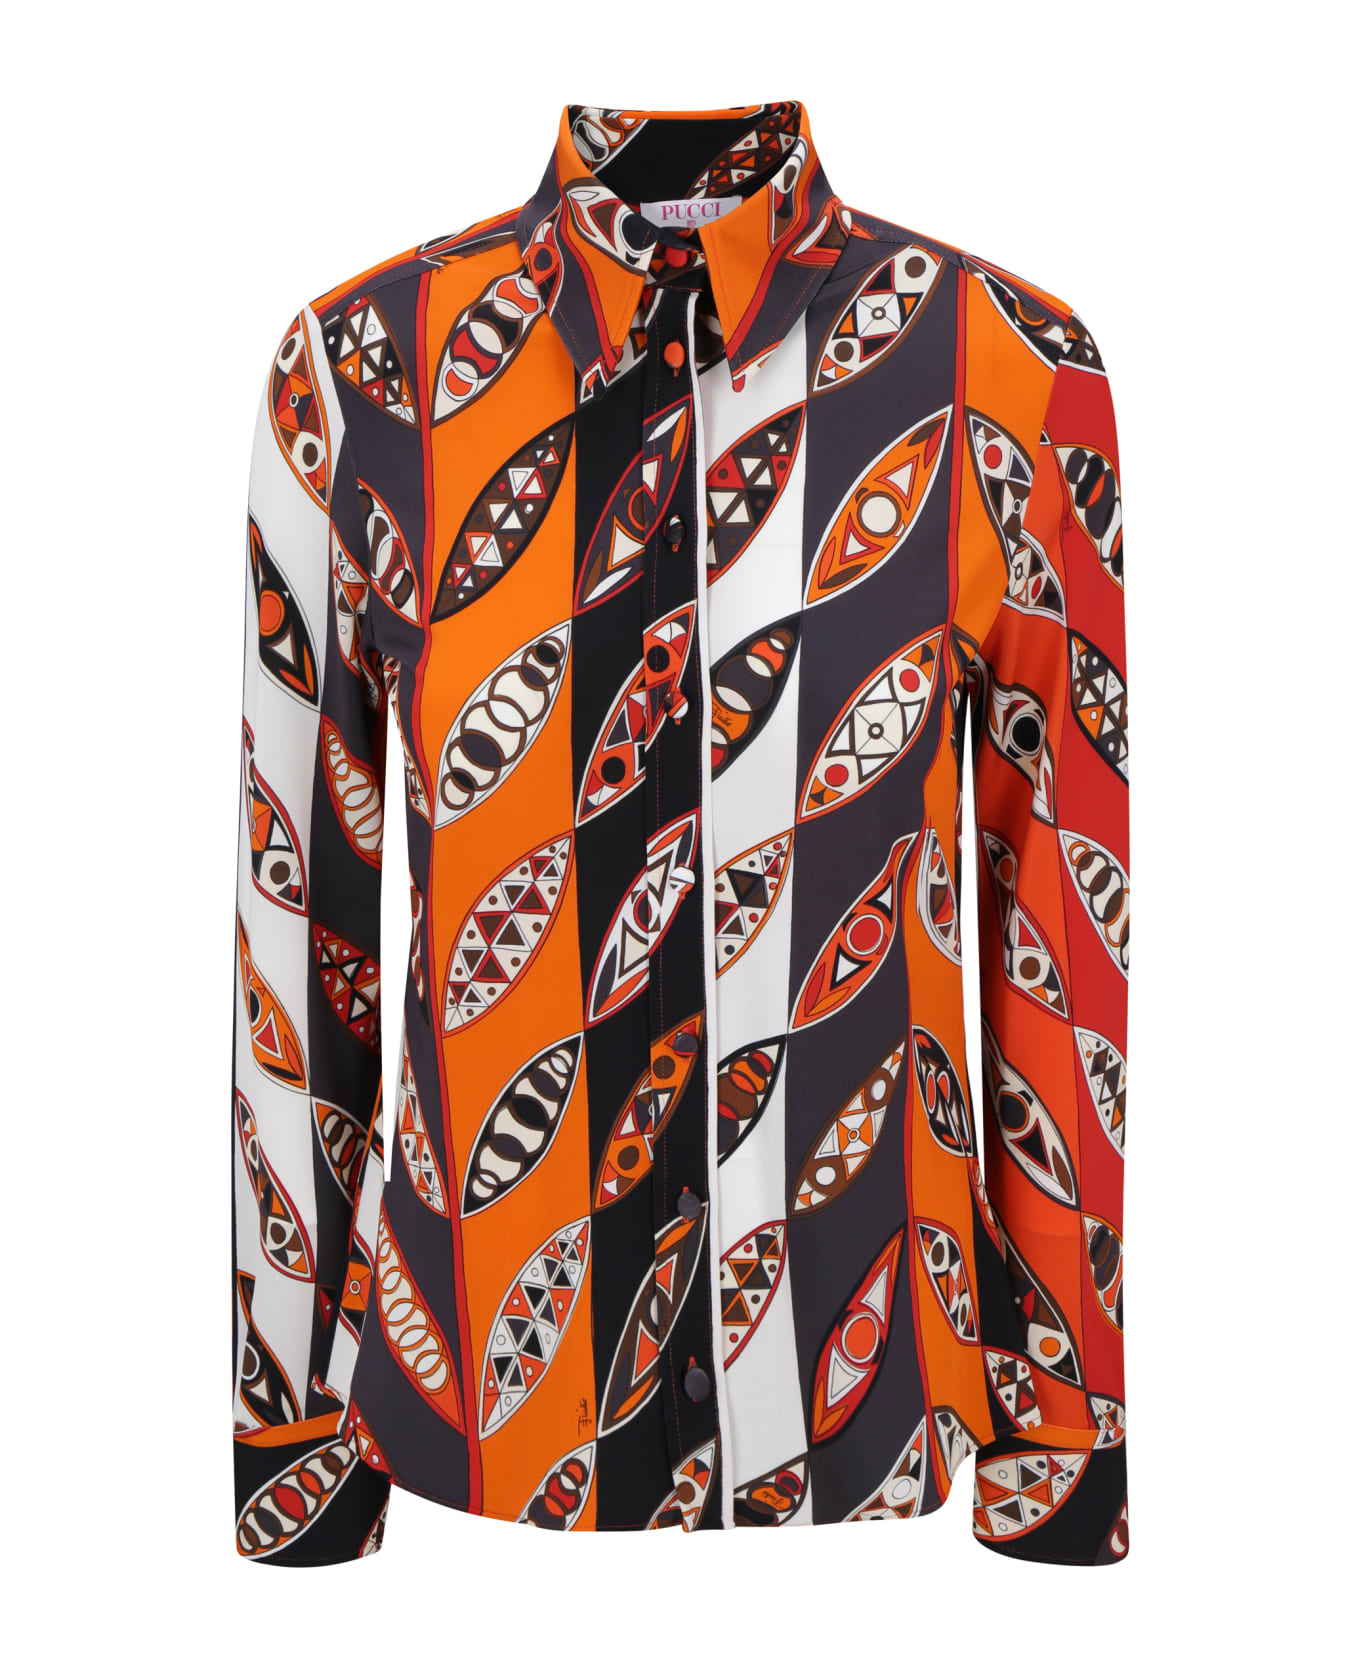 Pucci Shirt - Arancio/rosso シャツ